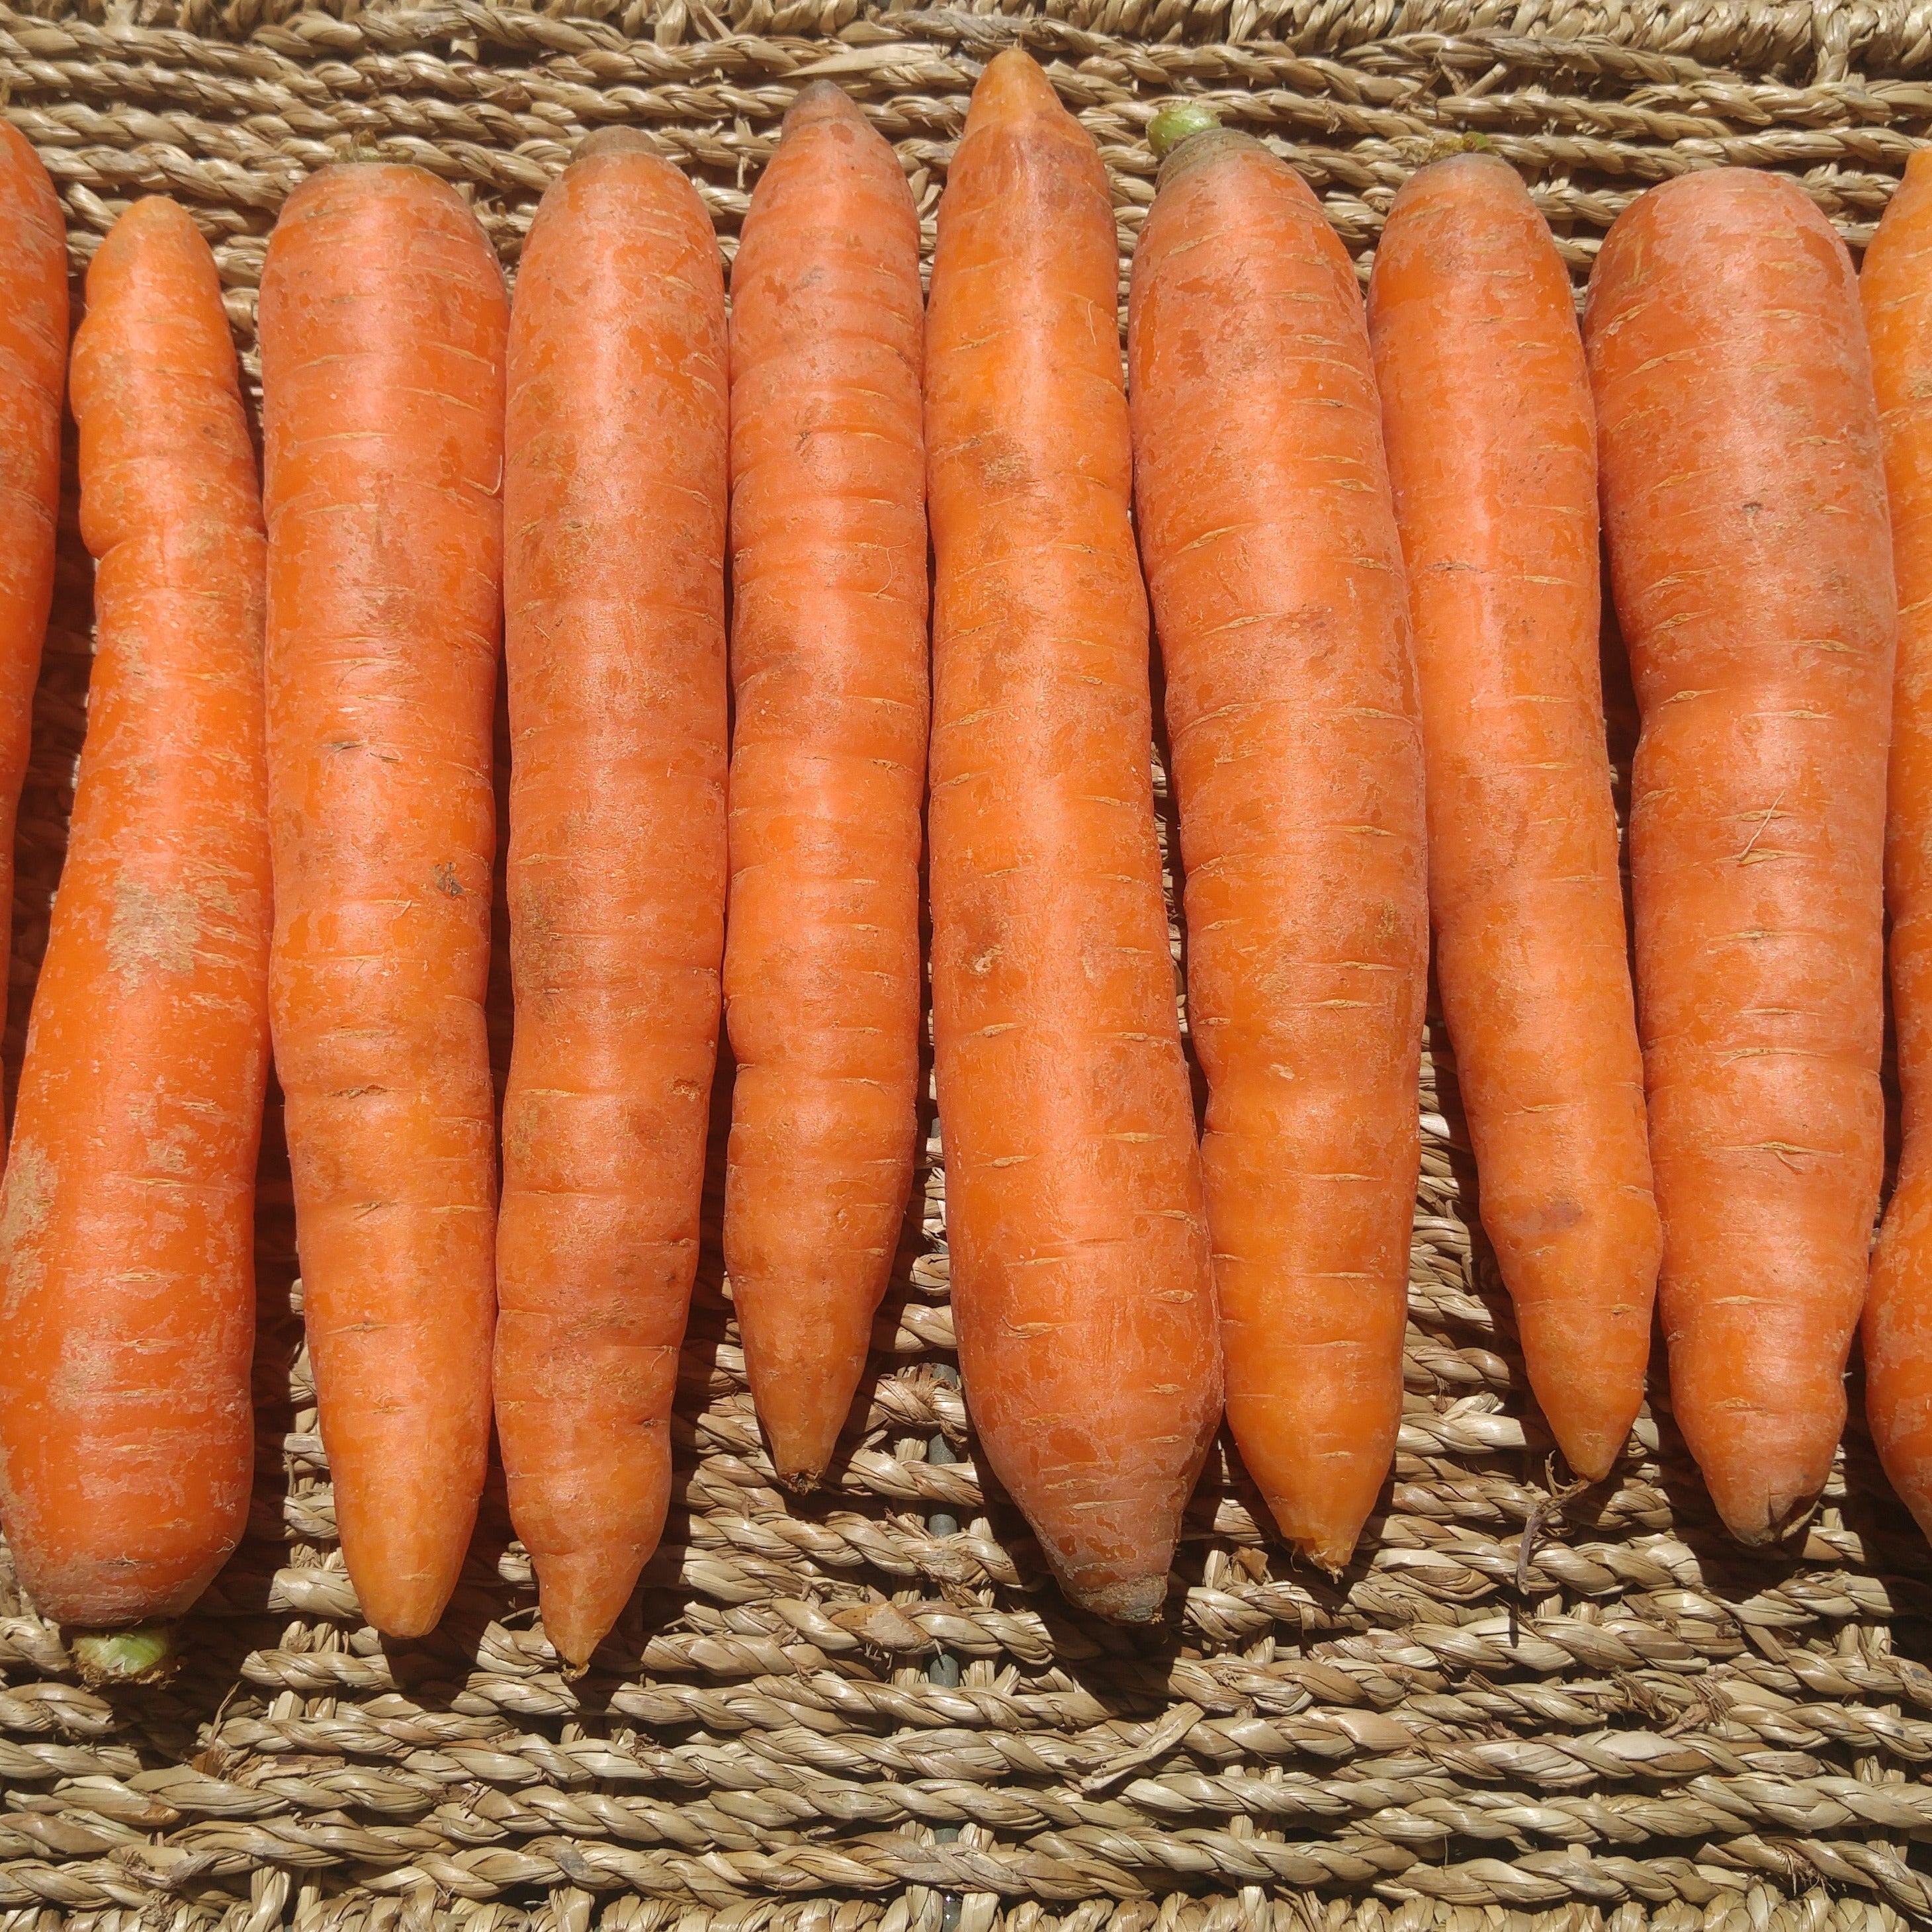 orange carrots on a woven mat